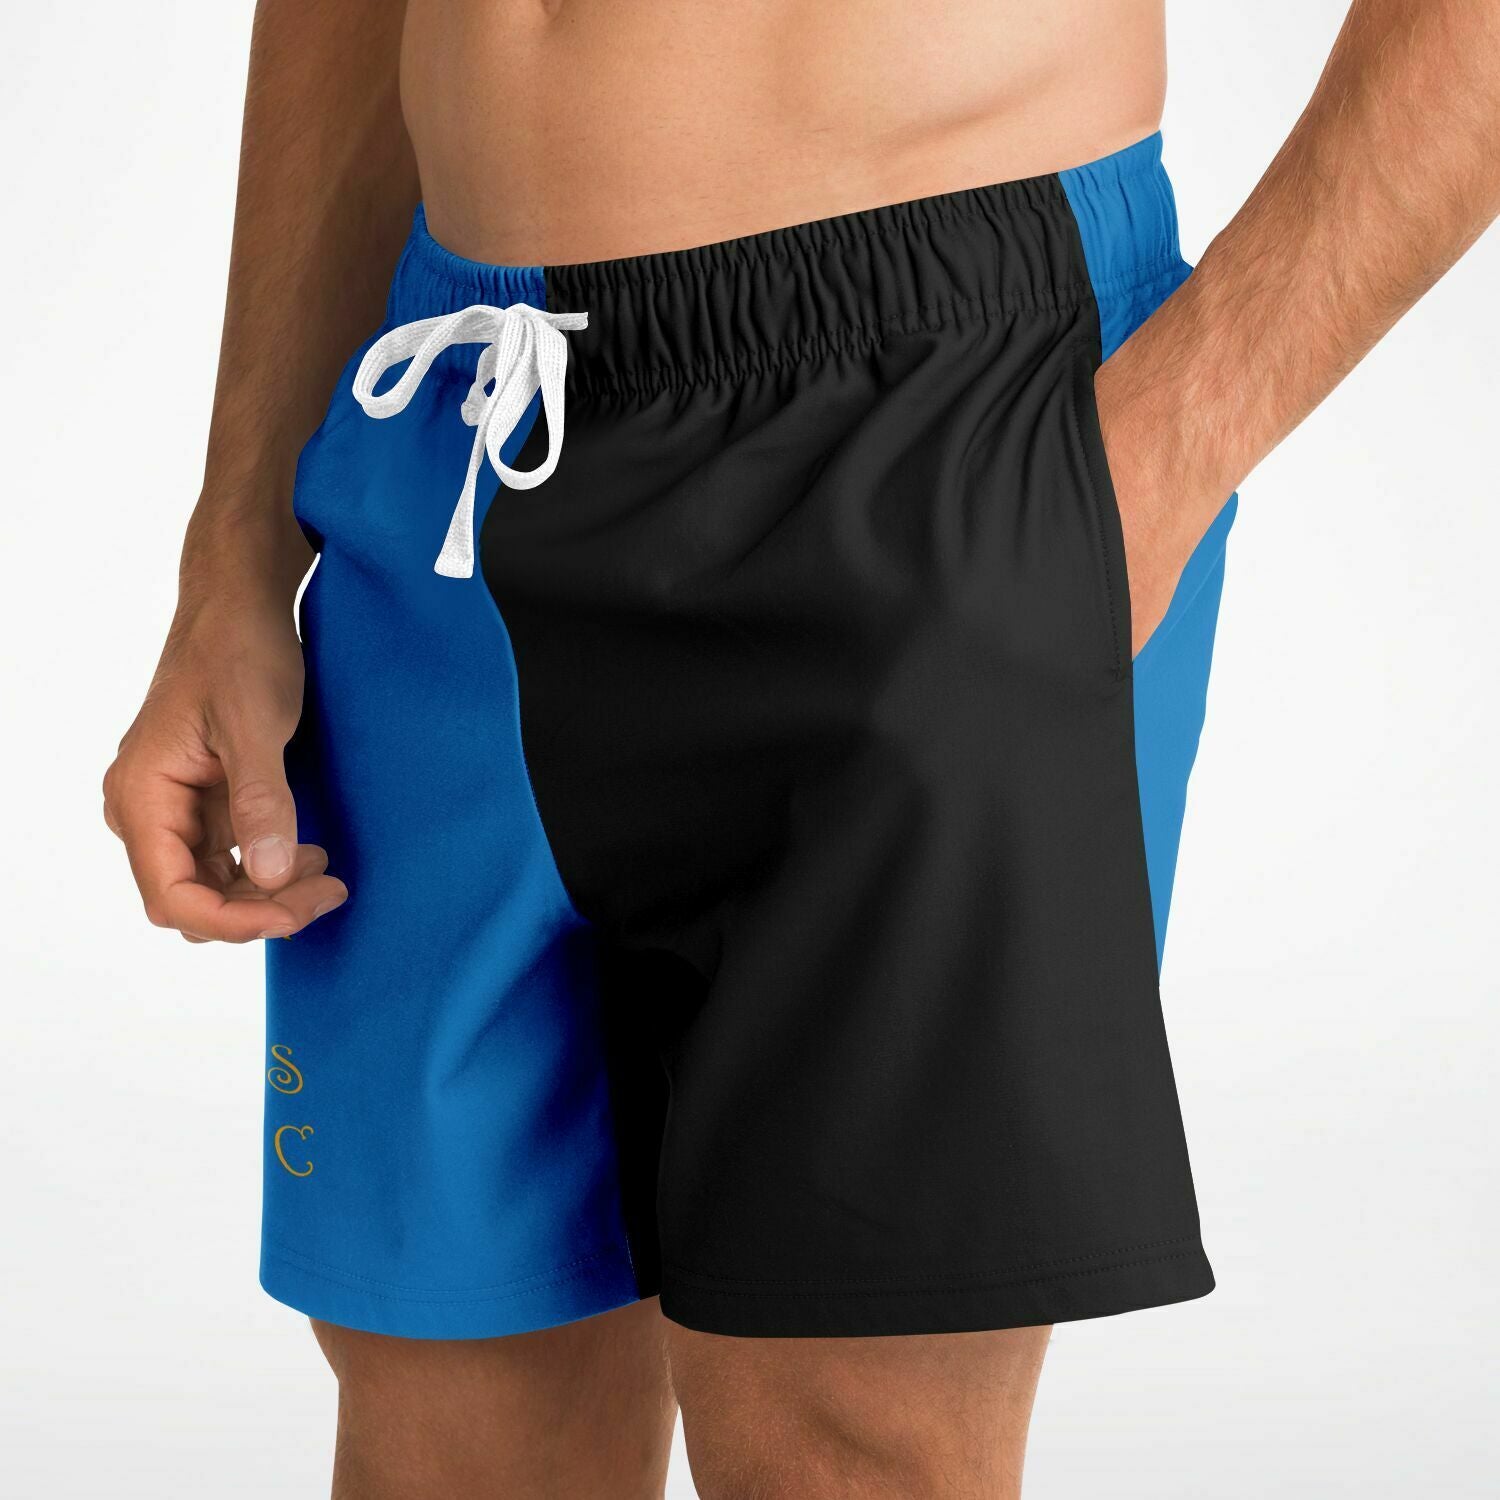 Adult Swim Club shorts